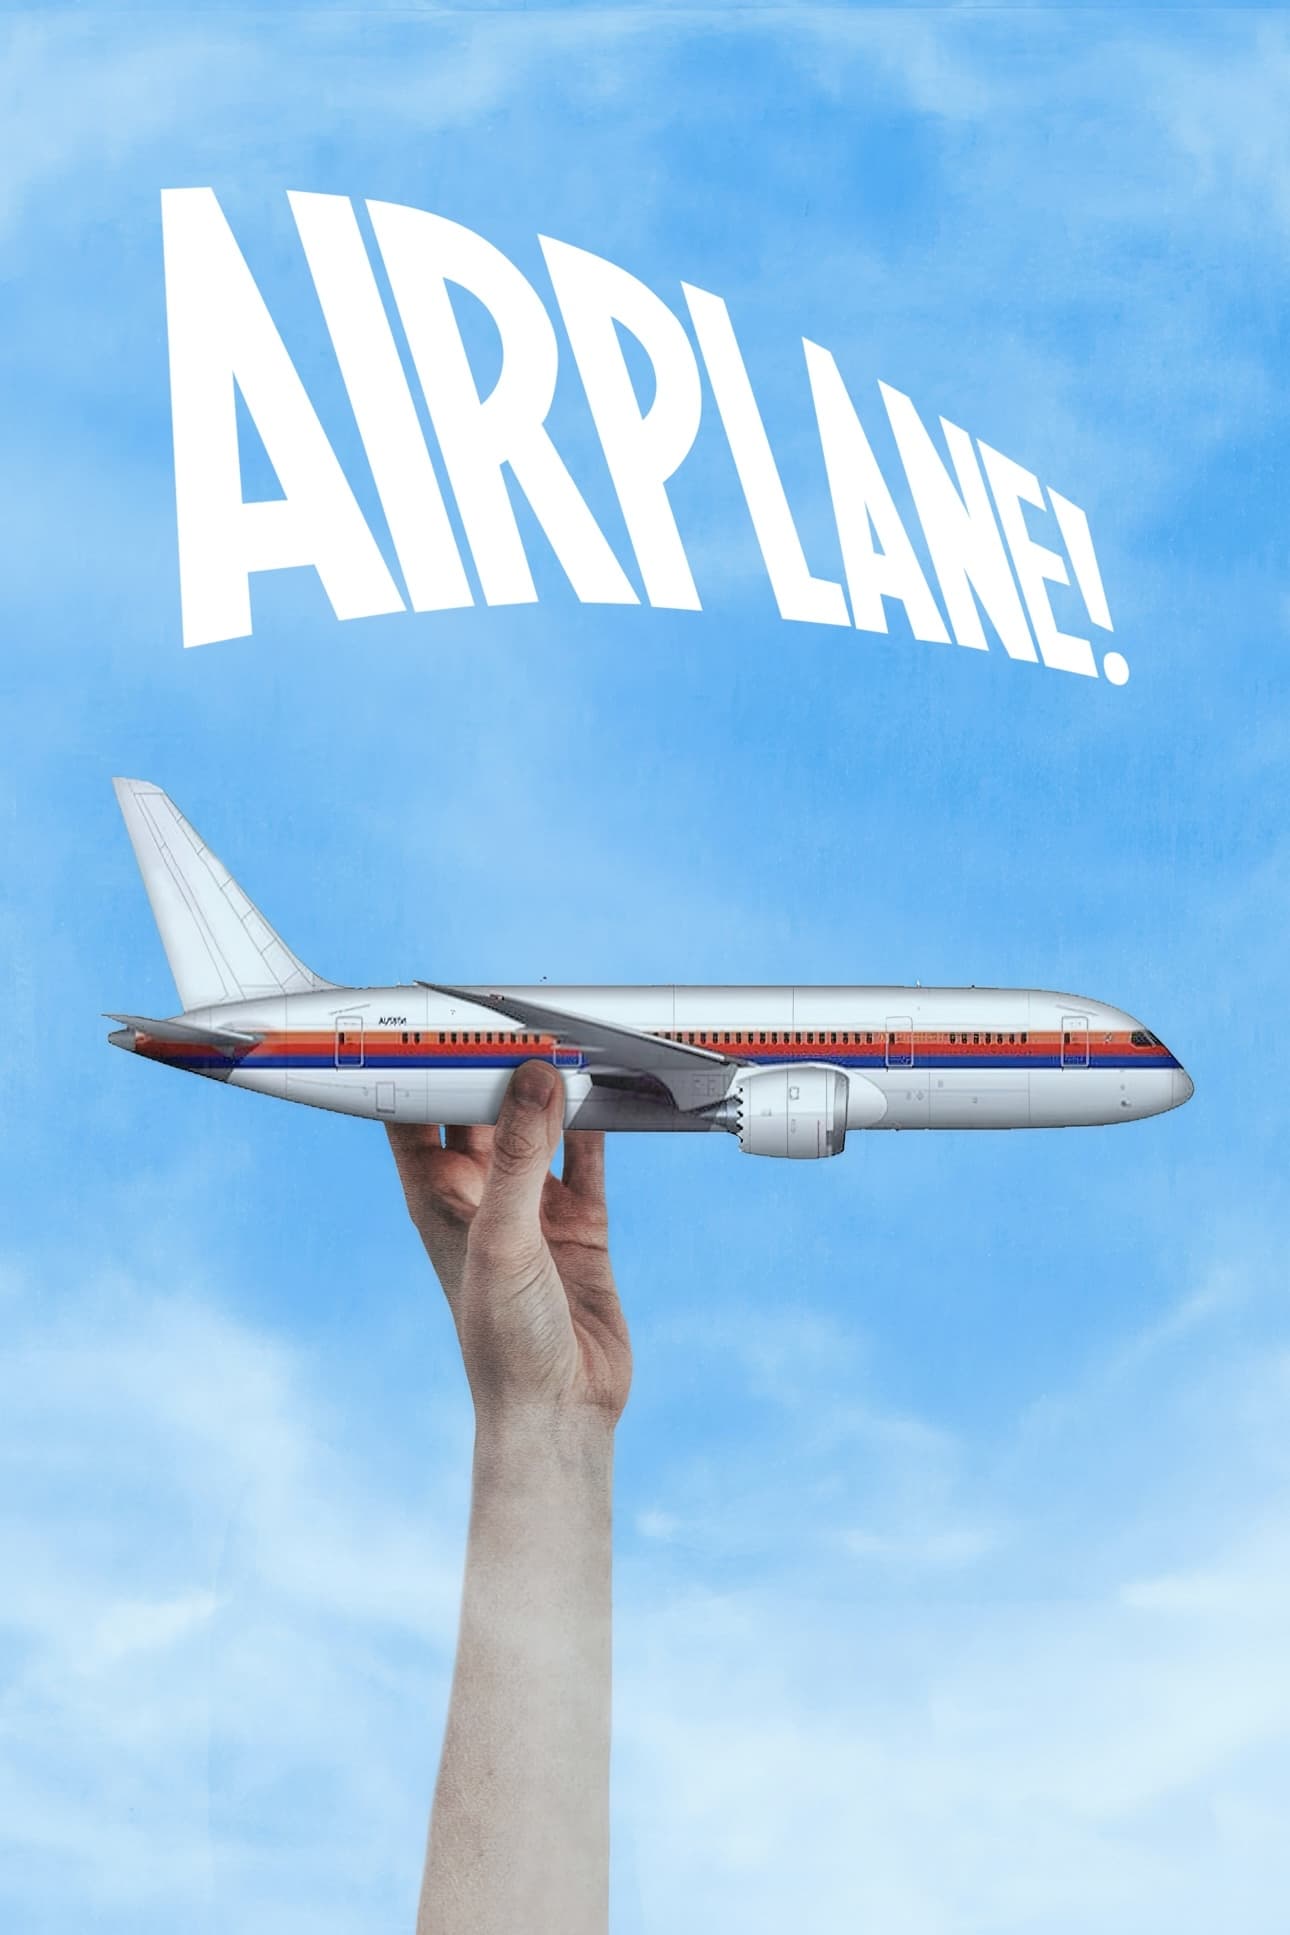 Airplane!